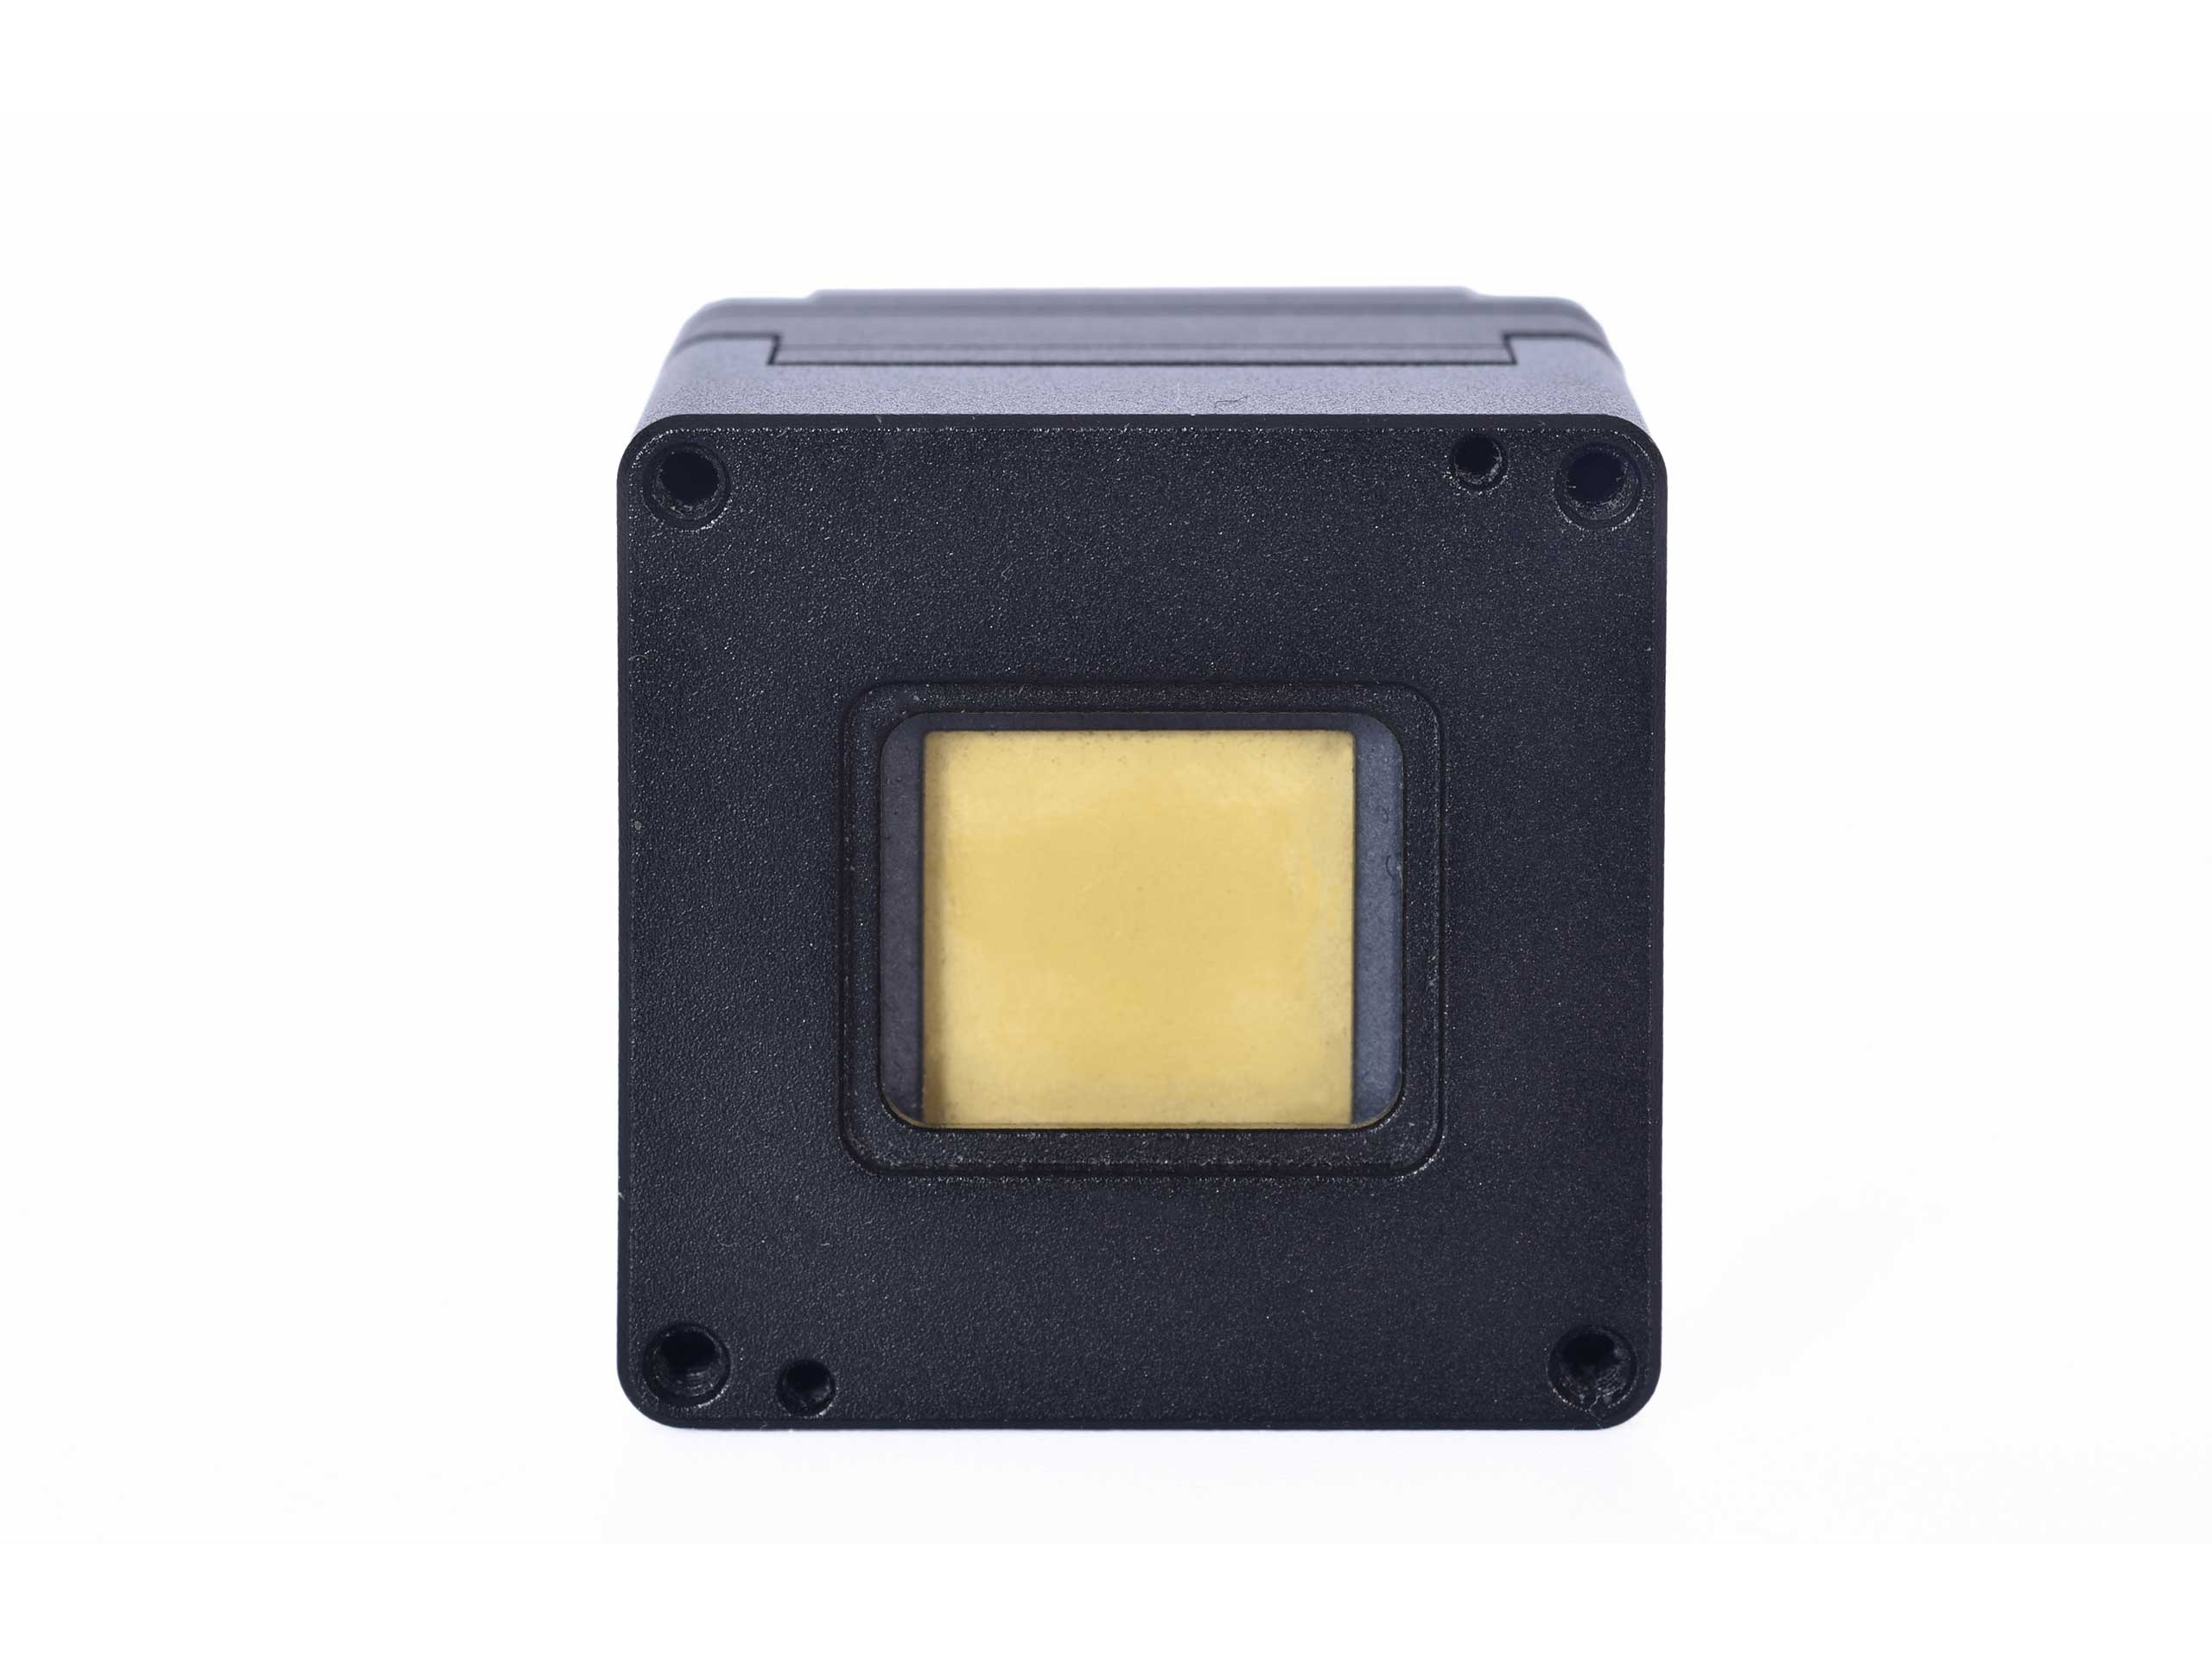 Long Wave Infrared camera micro cube